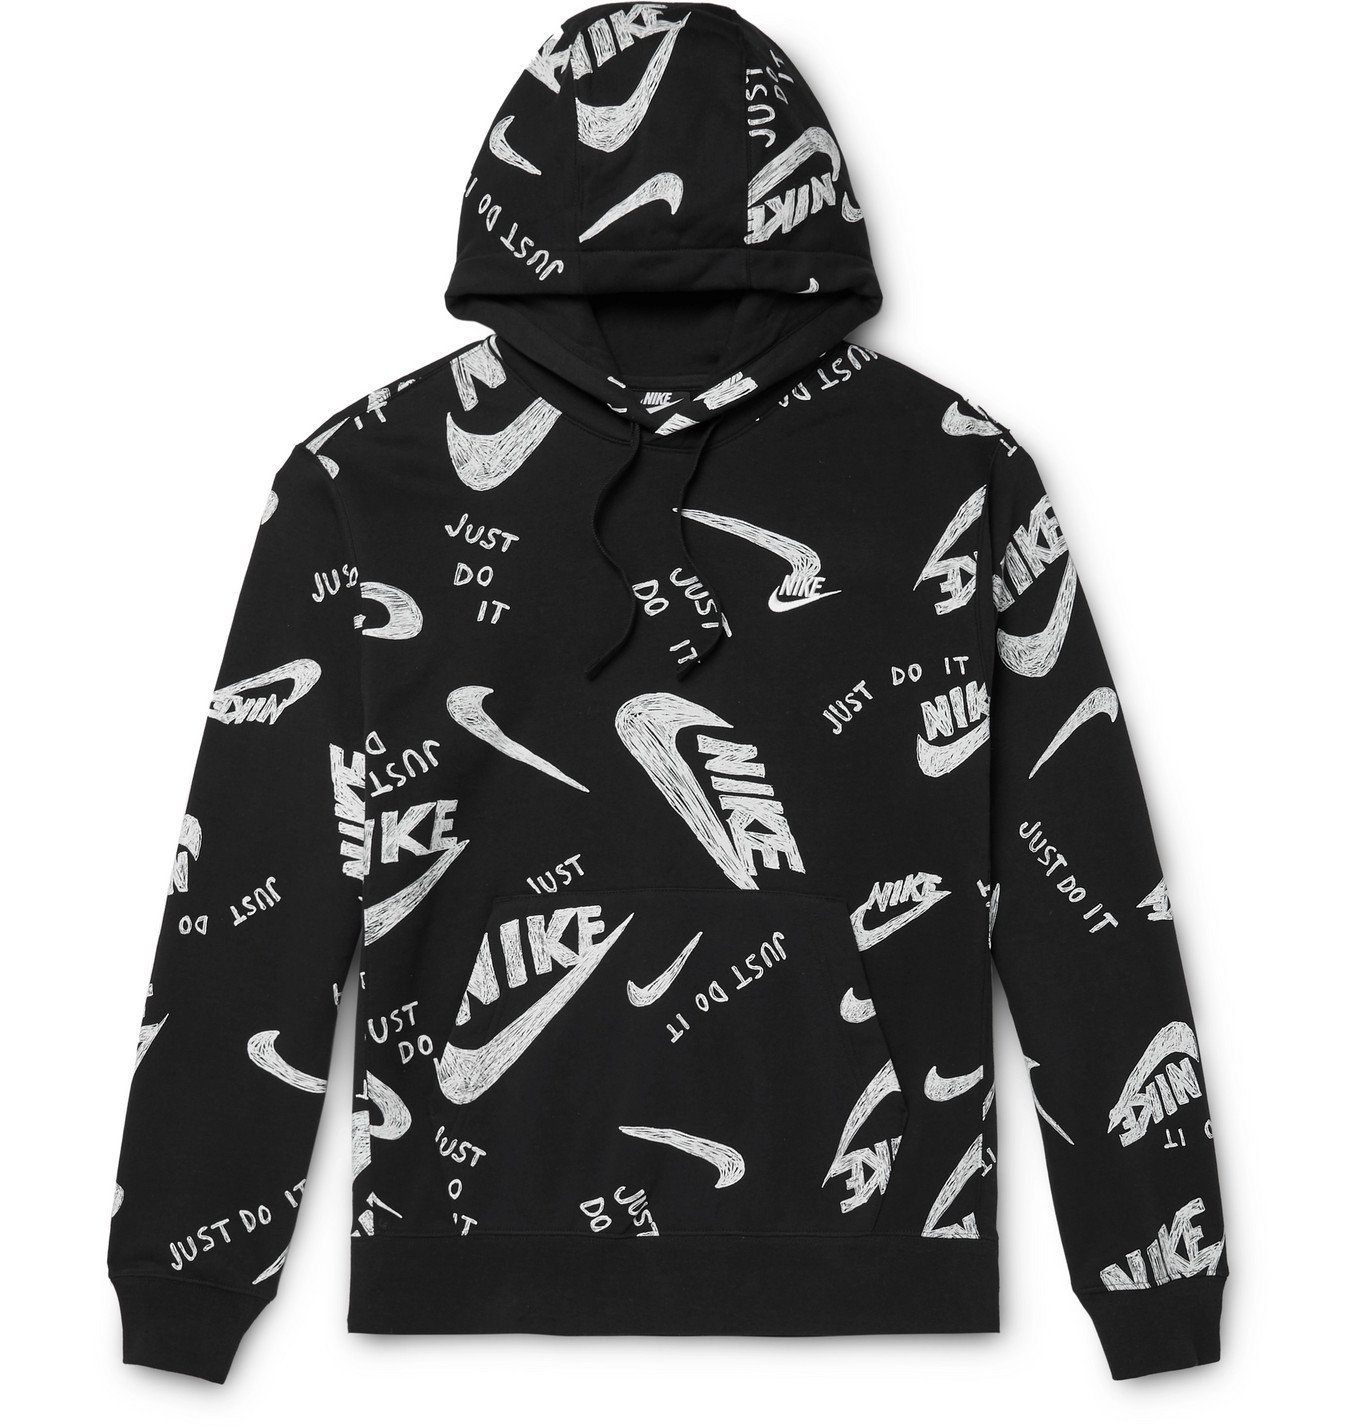 nike hoodie with logo on back